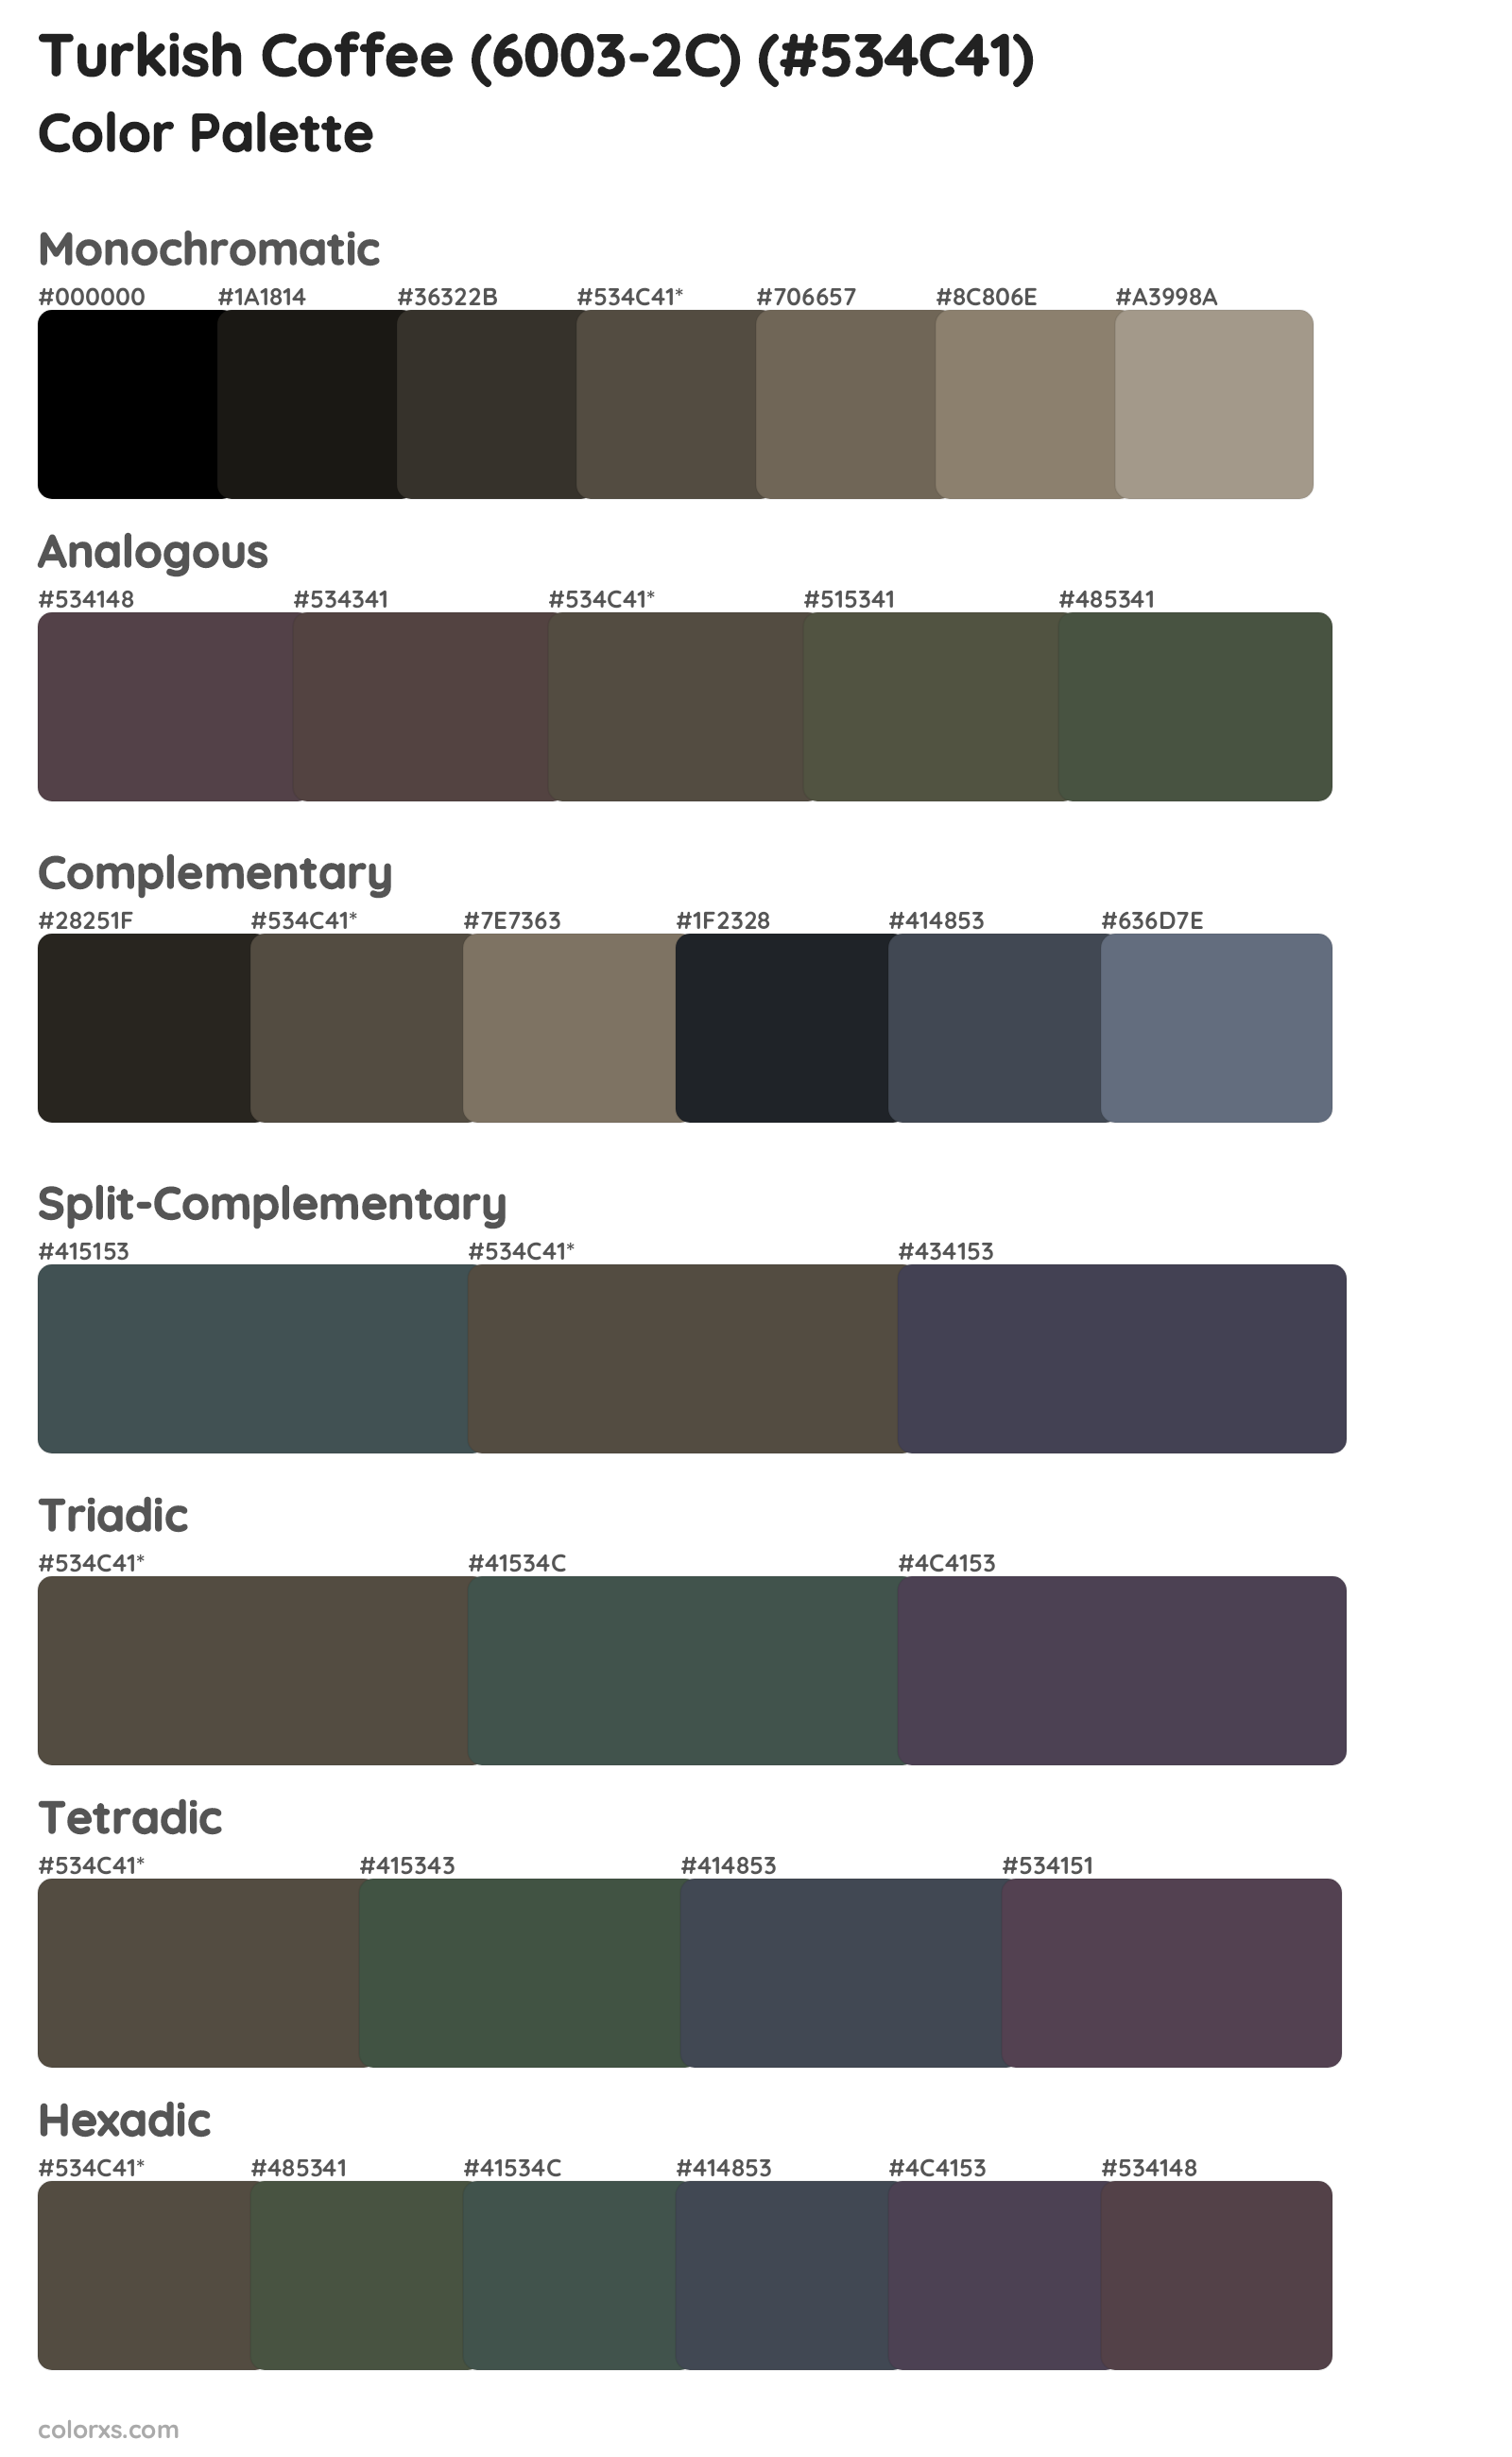 Turkish Coffee (6003-2C) Color Scheme Palettes